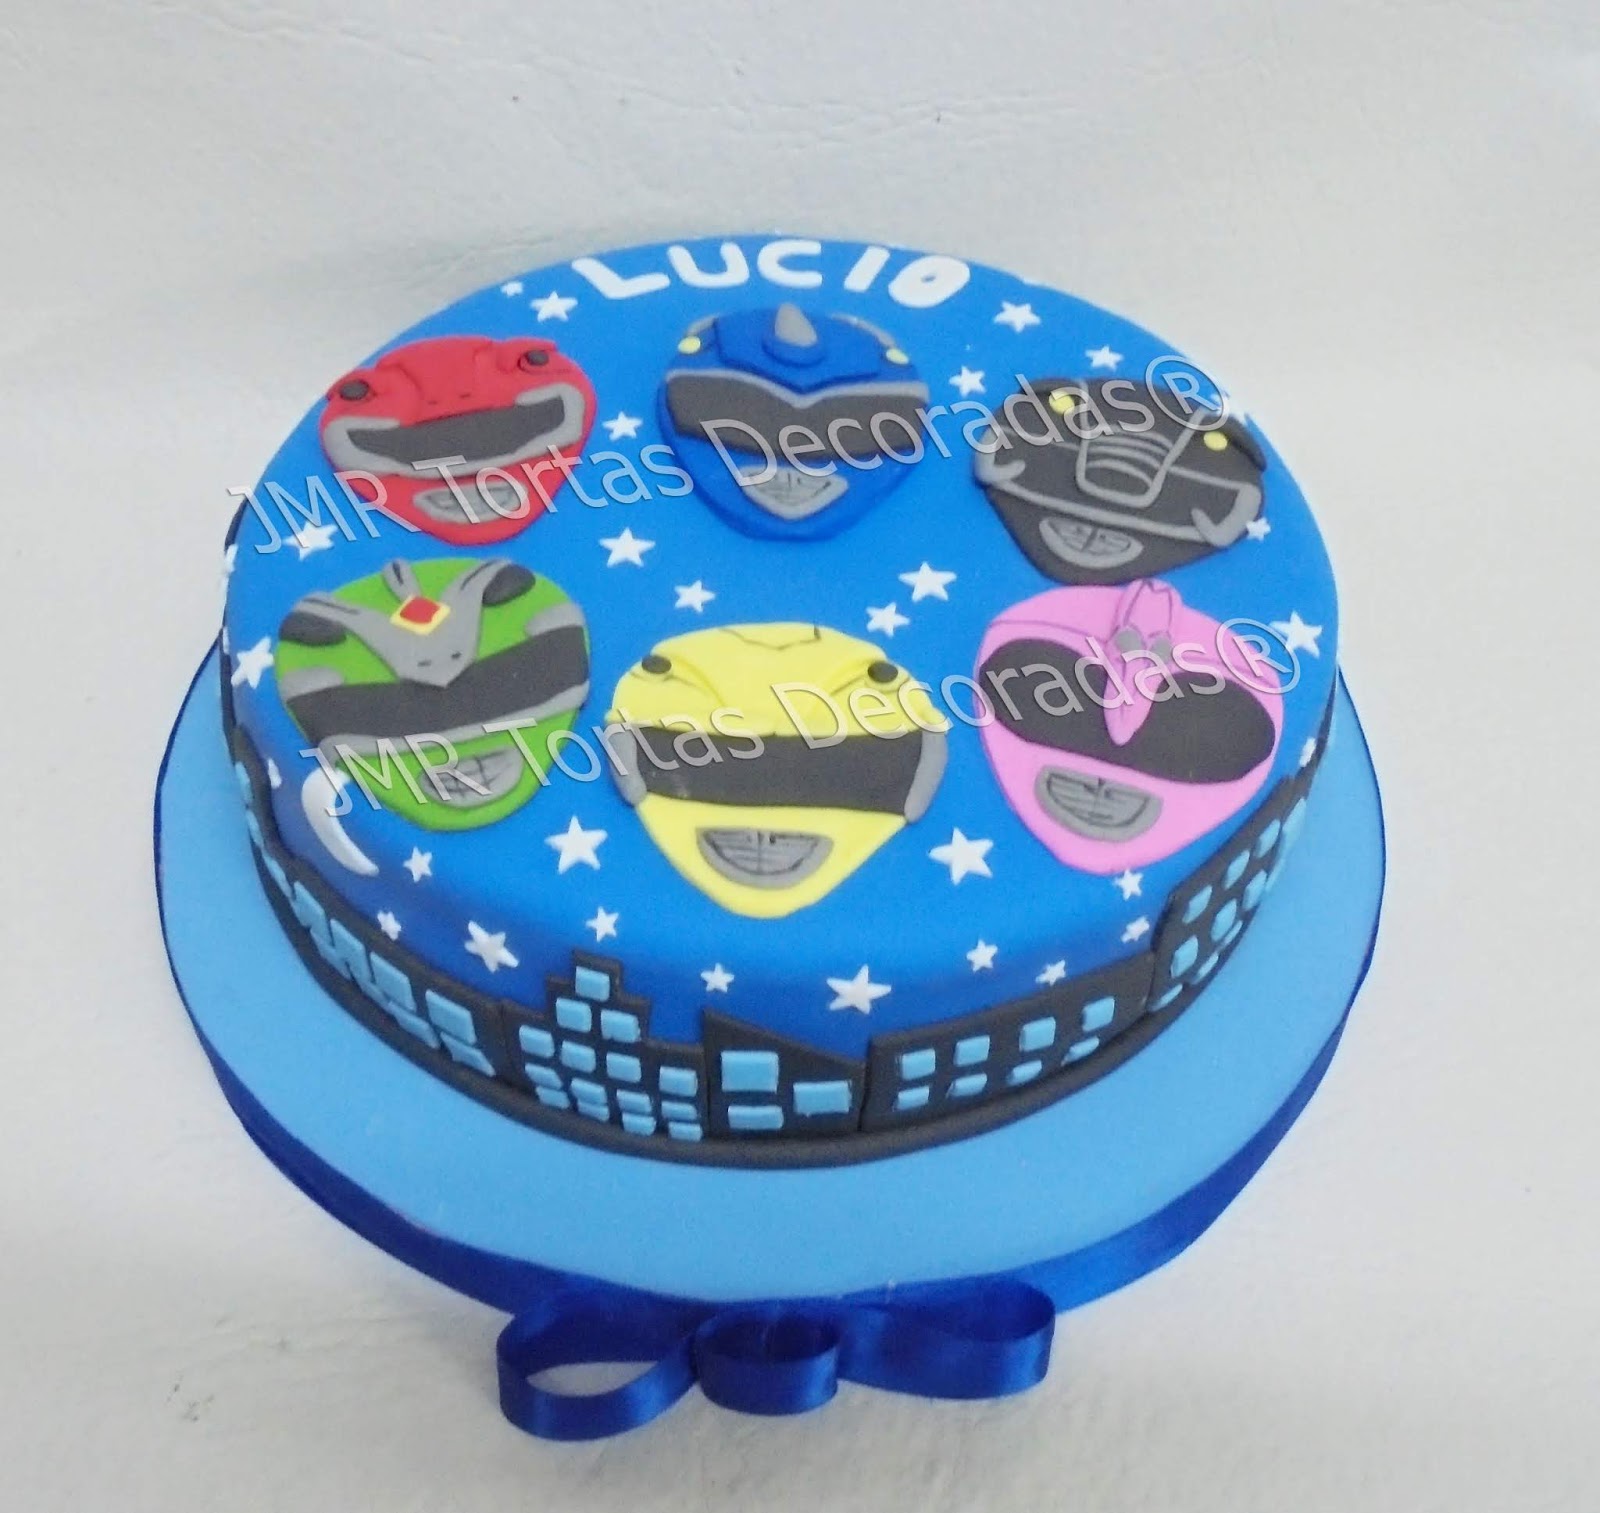 Torta Power Rangers en plano | JMR Tortas Decoradas